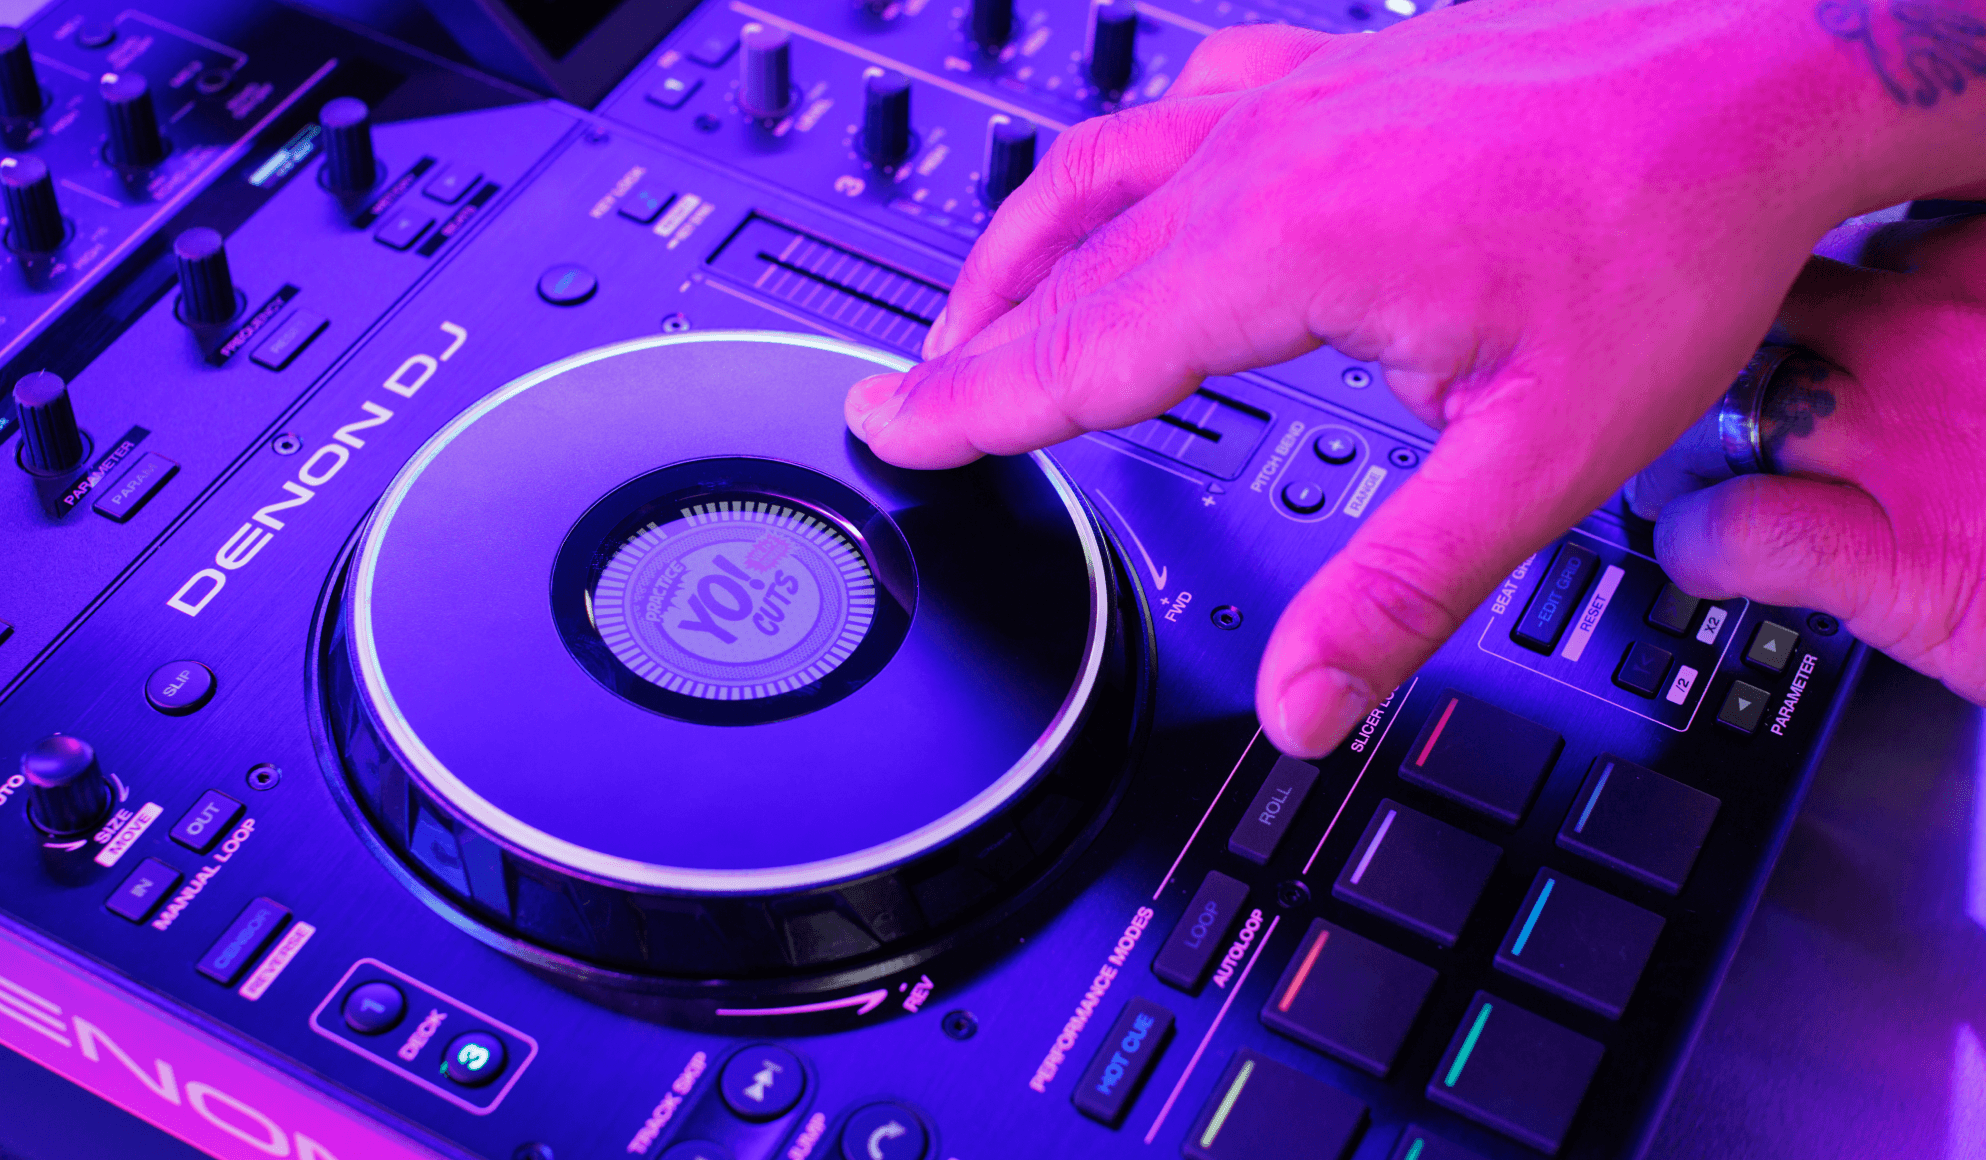 Denon DJ PRIME4XUS Prime 4 4-Deck Standalone DJ System with 10-inch  Touchcreen